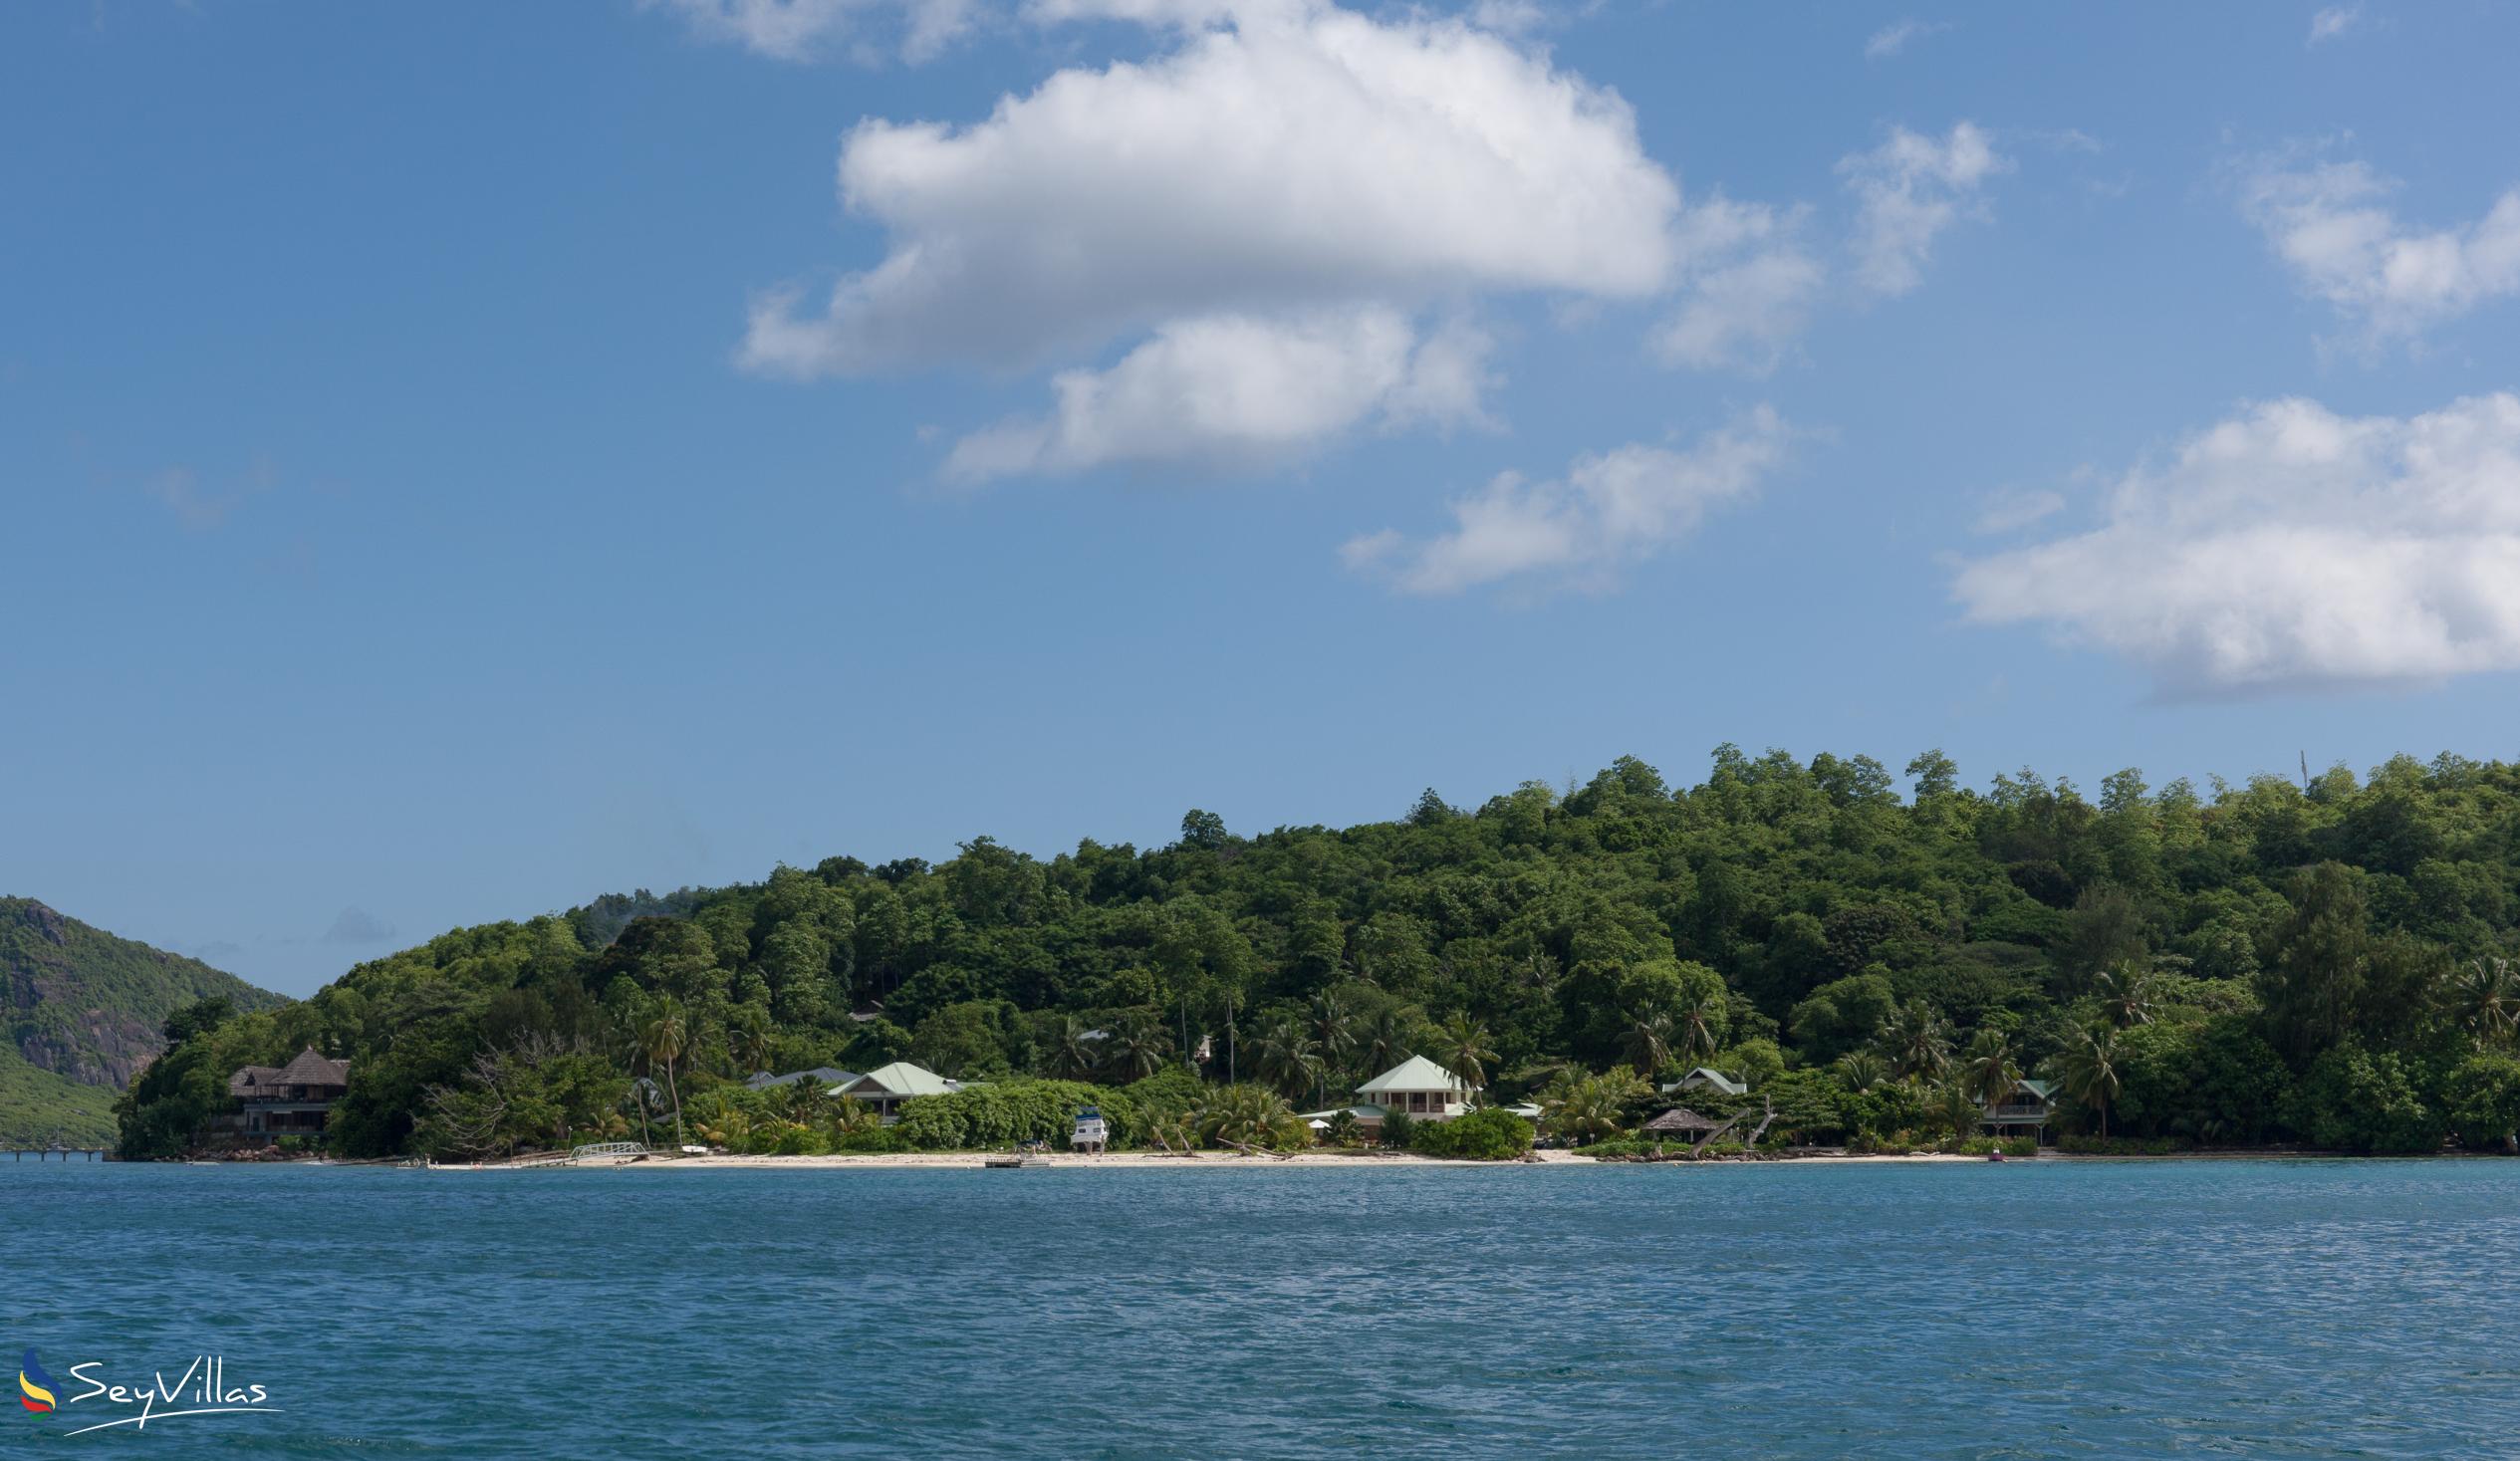 Foto 15: Villa de Cerf - Location - Cerf Island (Seychelles)